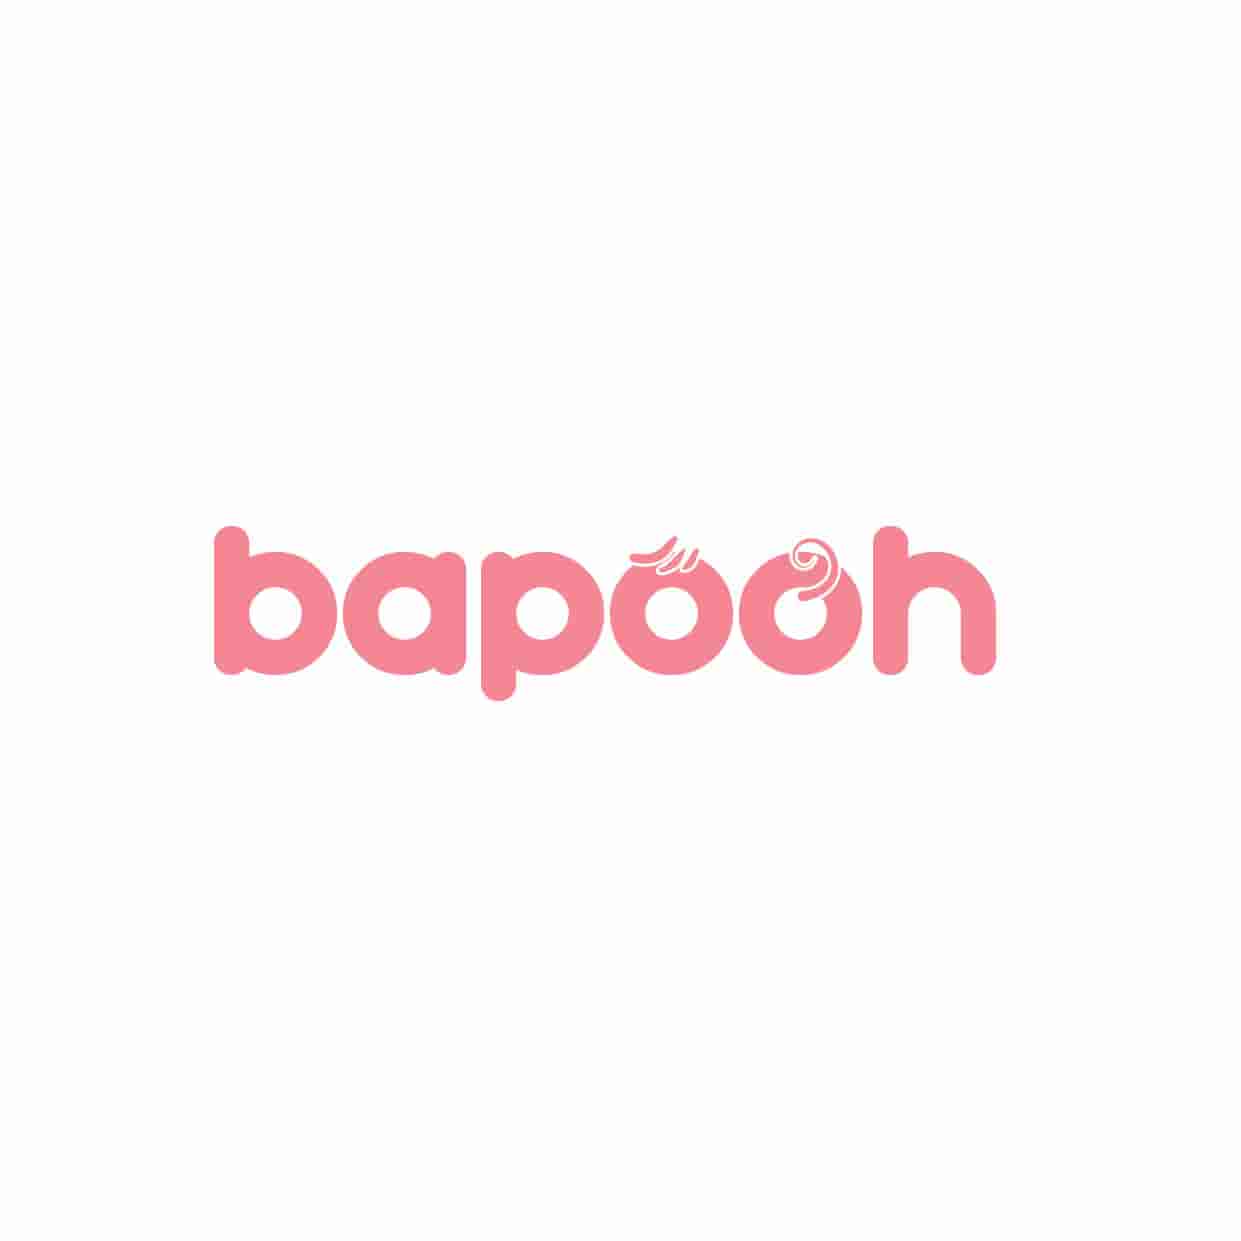 bapooh2-03